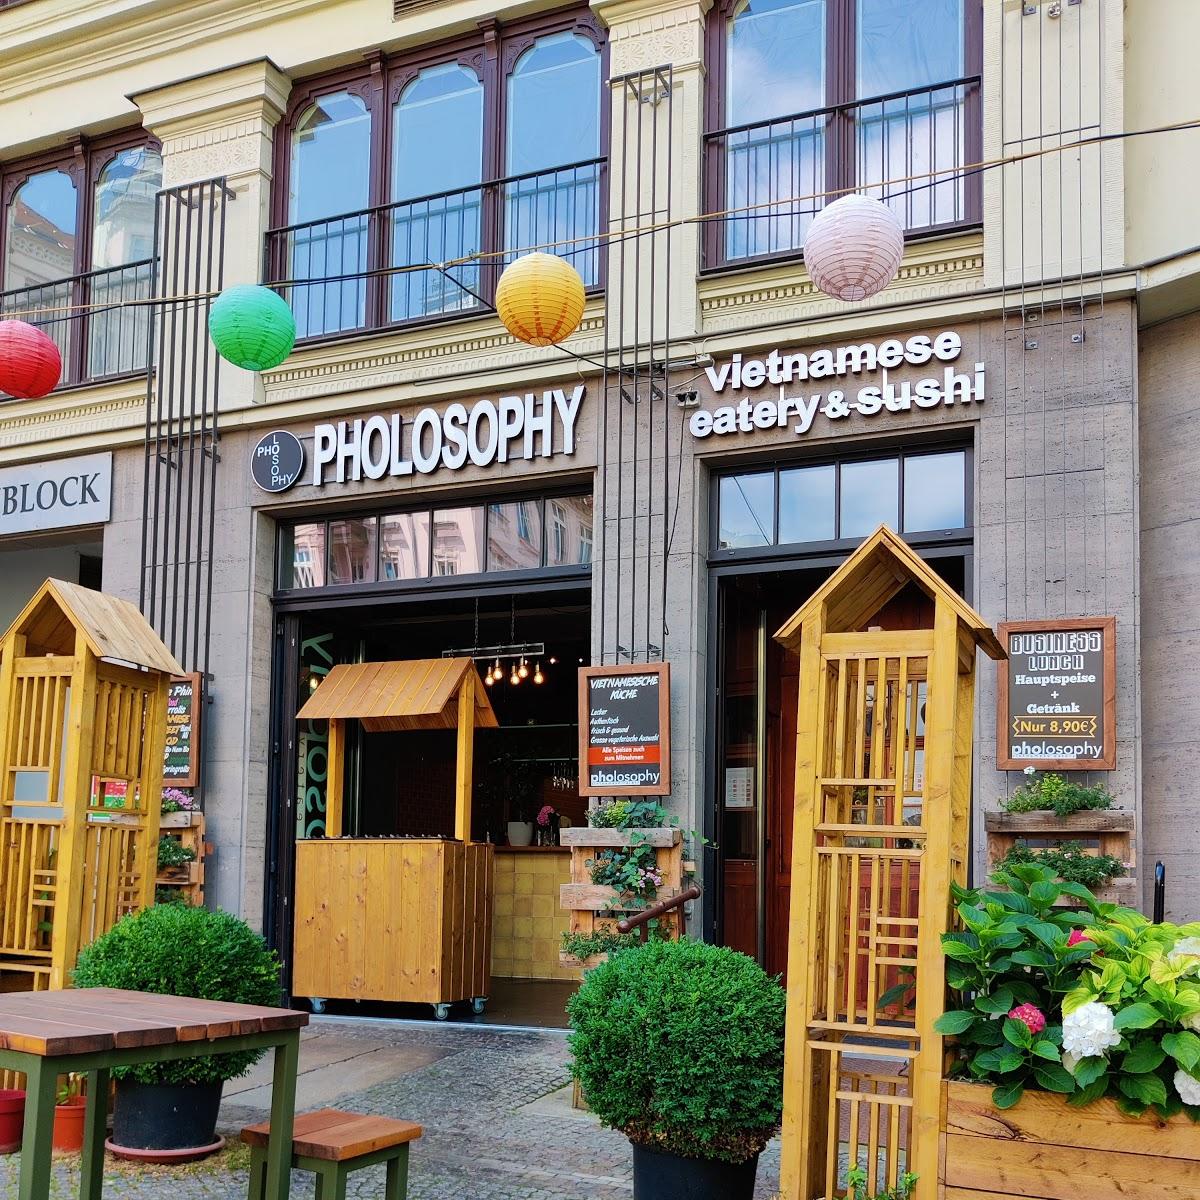 Restaurant "Pholosophy - vietnamese eatery & sushi" in Leipzig